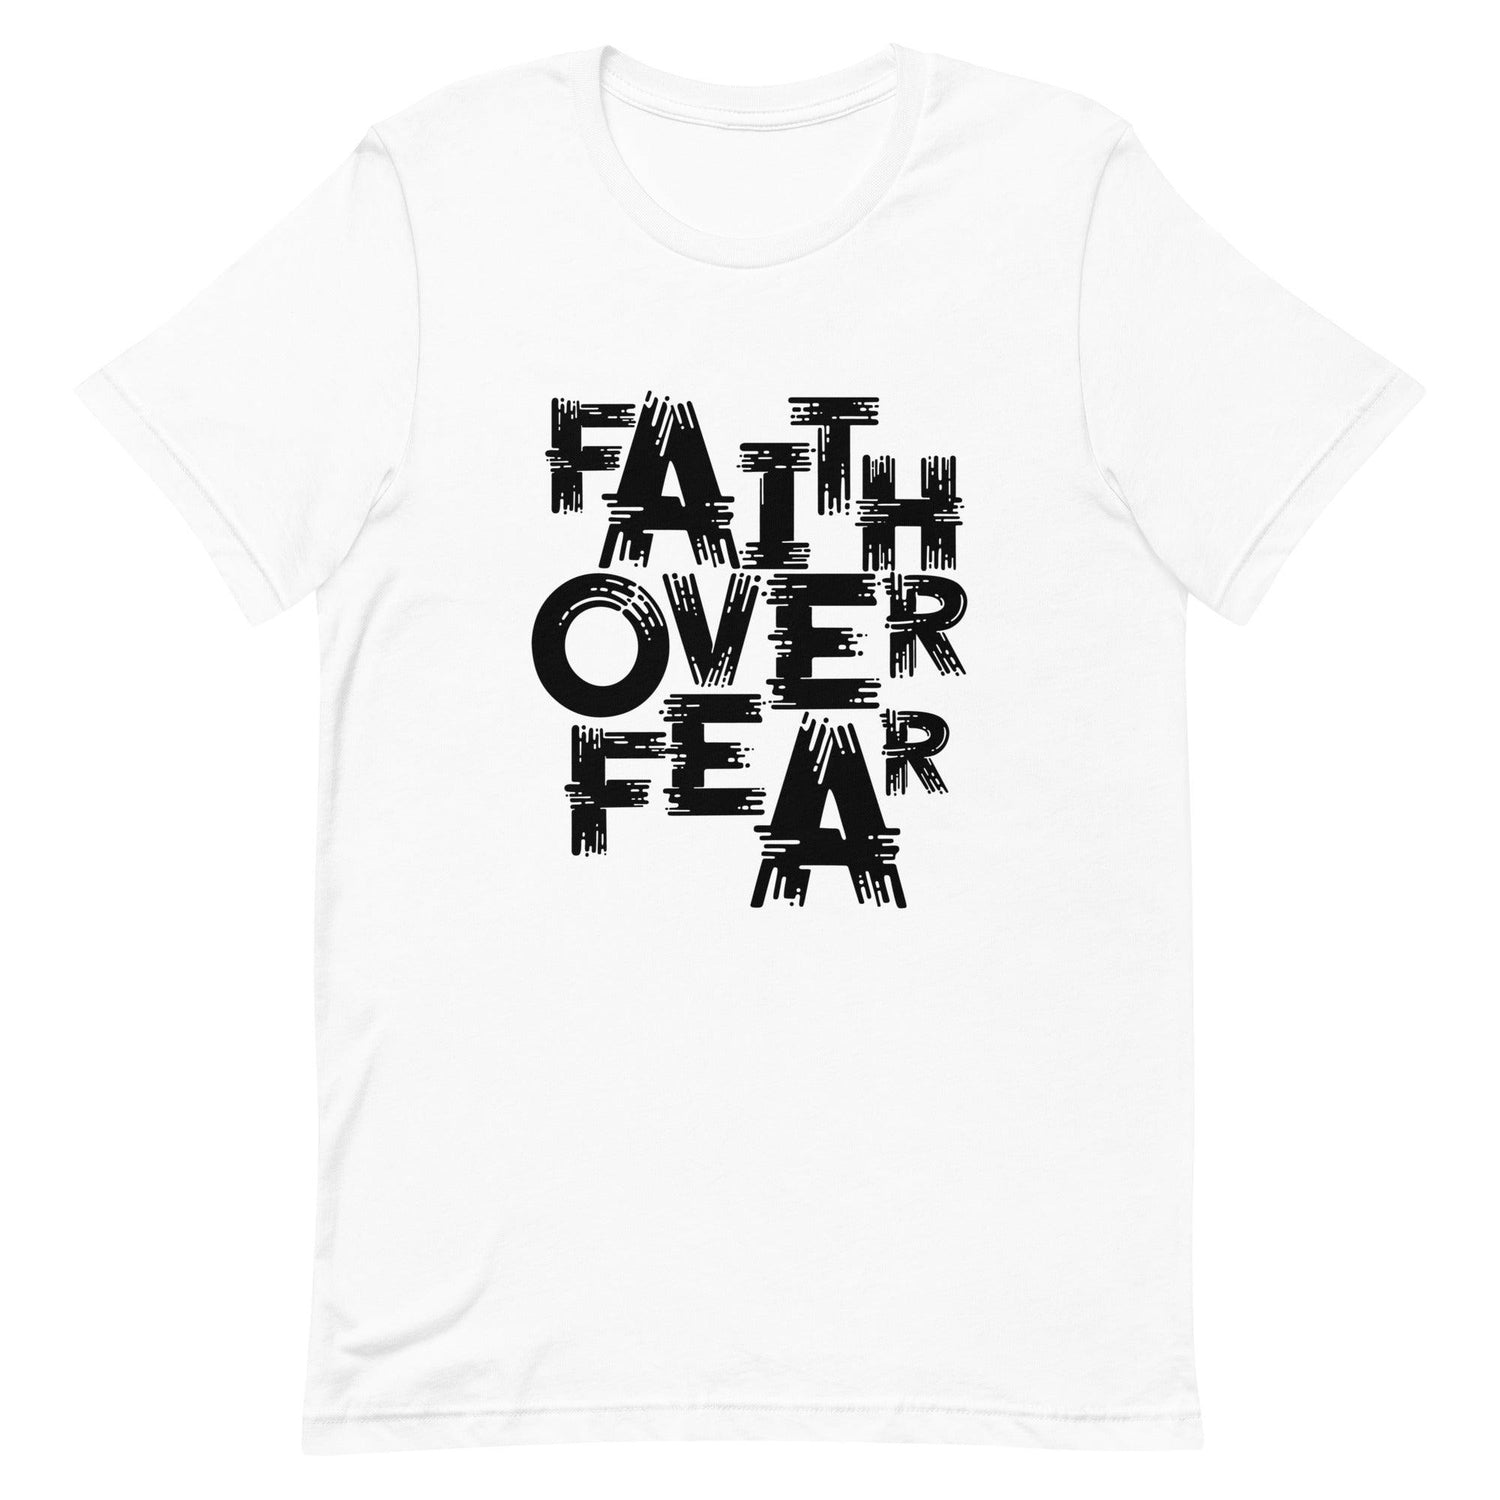 Diondre Borel "Faith Over Fear" t-shirt - Fan Arch